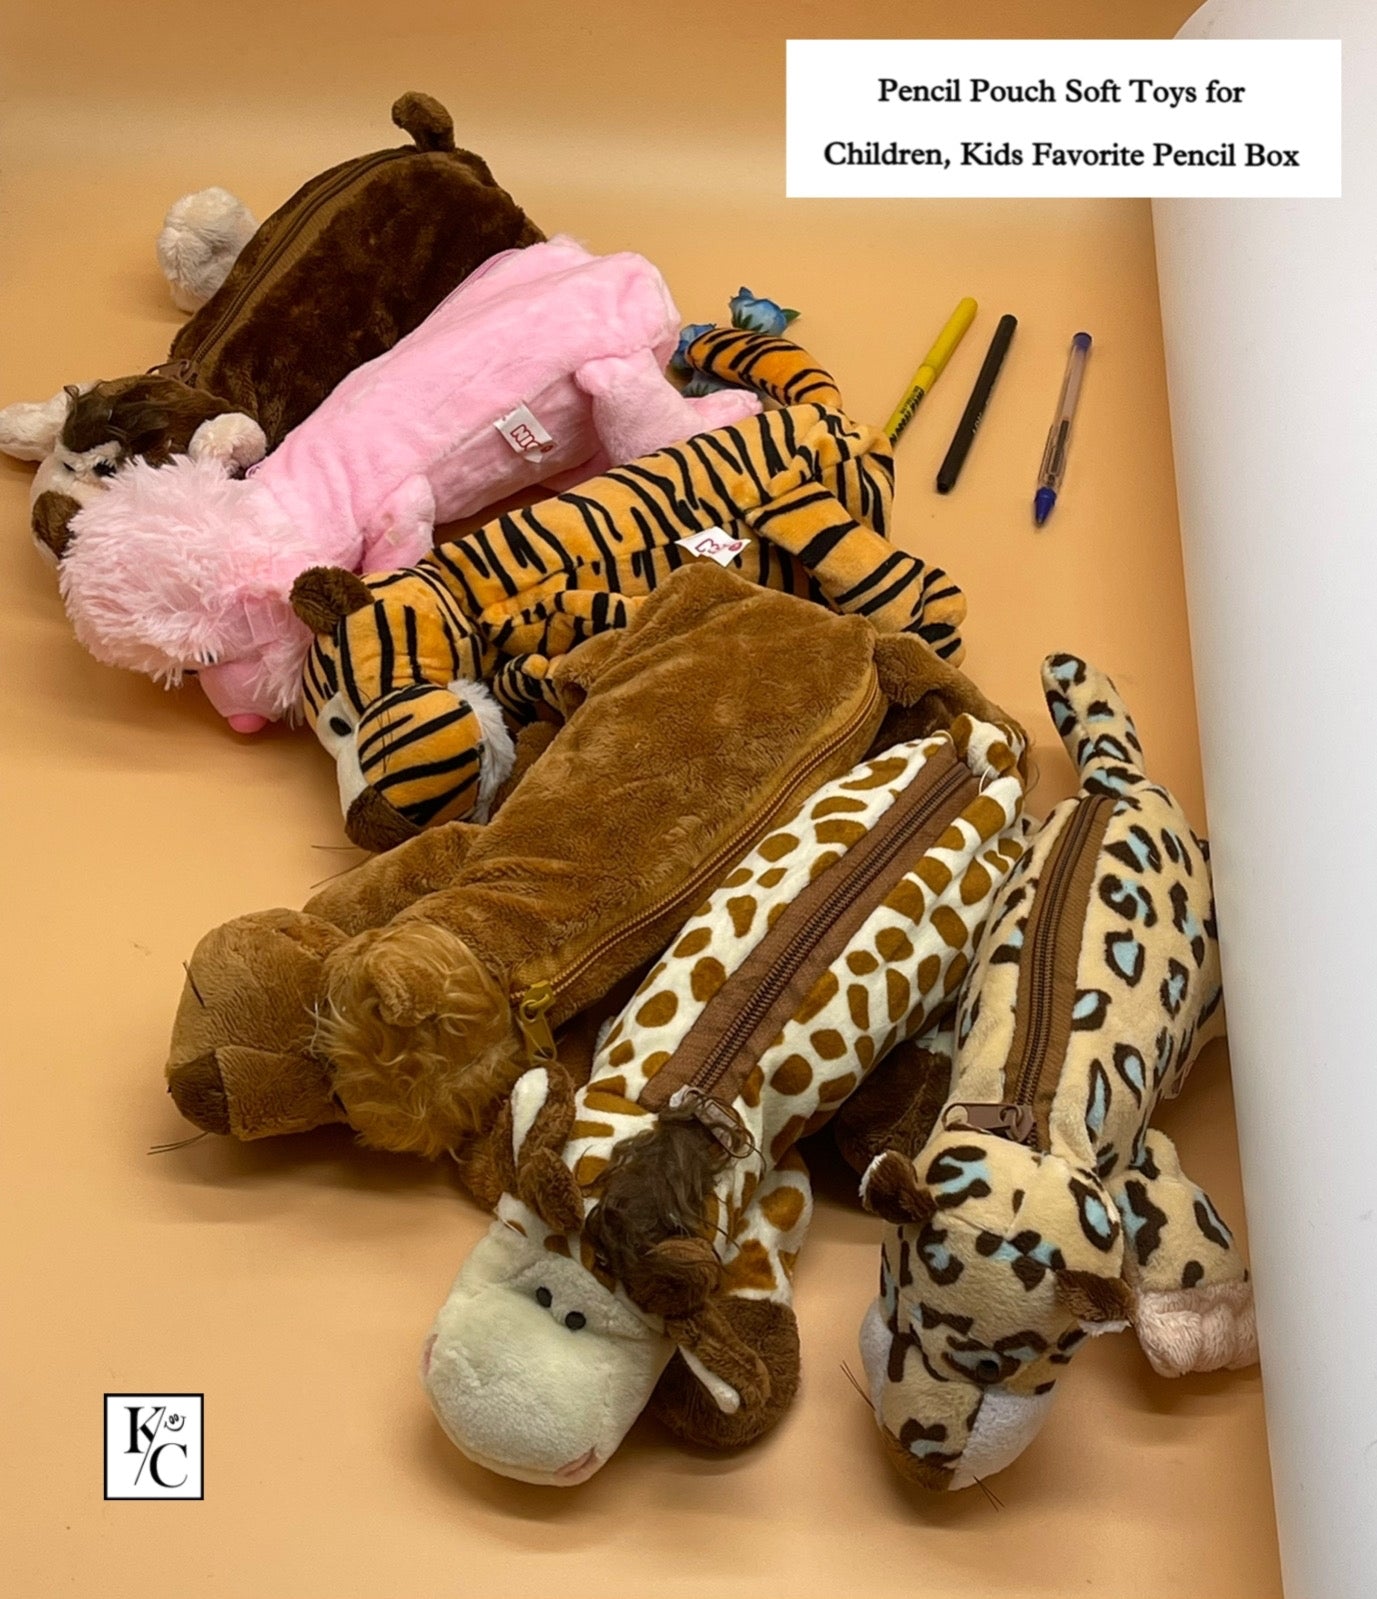 Set of 5 , Pencil Pouch Soft Toys for Children, Kids Favorite Pencil B –